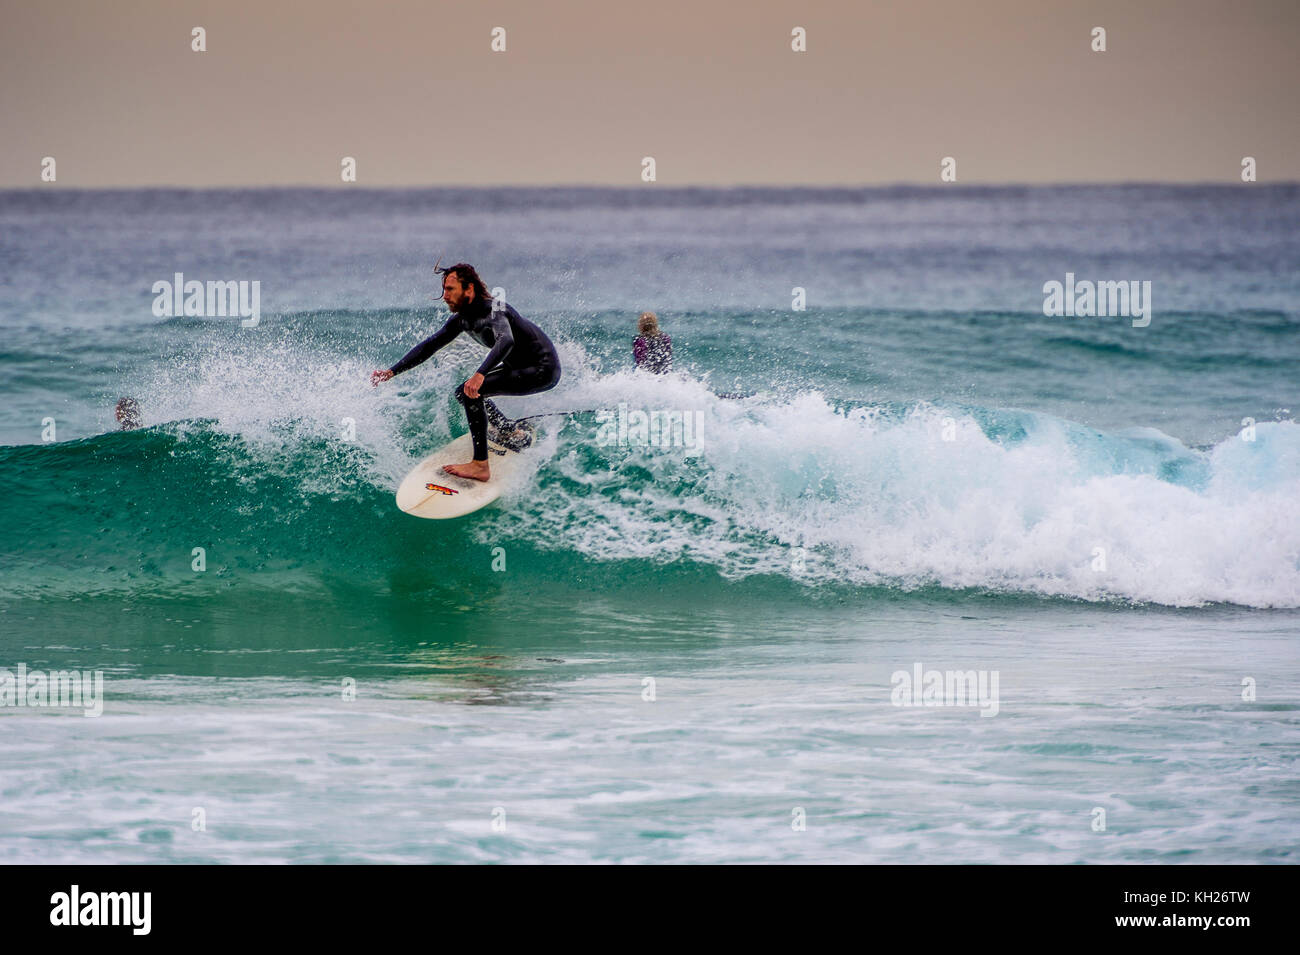 A surfer rides a wave at Sydney's iconic Bondi Beach, NSW, Australia Stock Photo